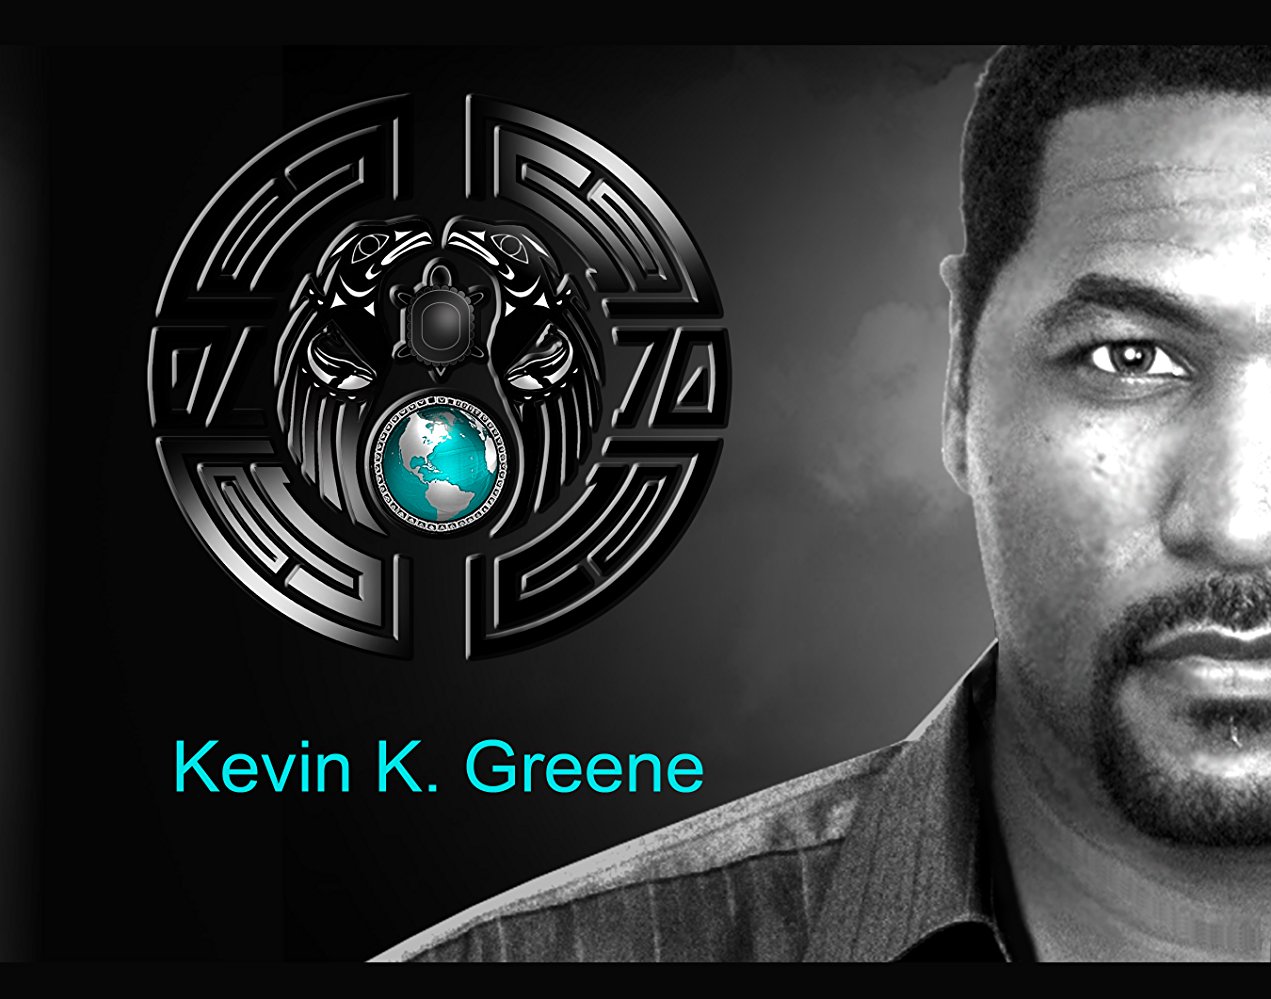 Kevin K. Greene